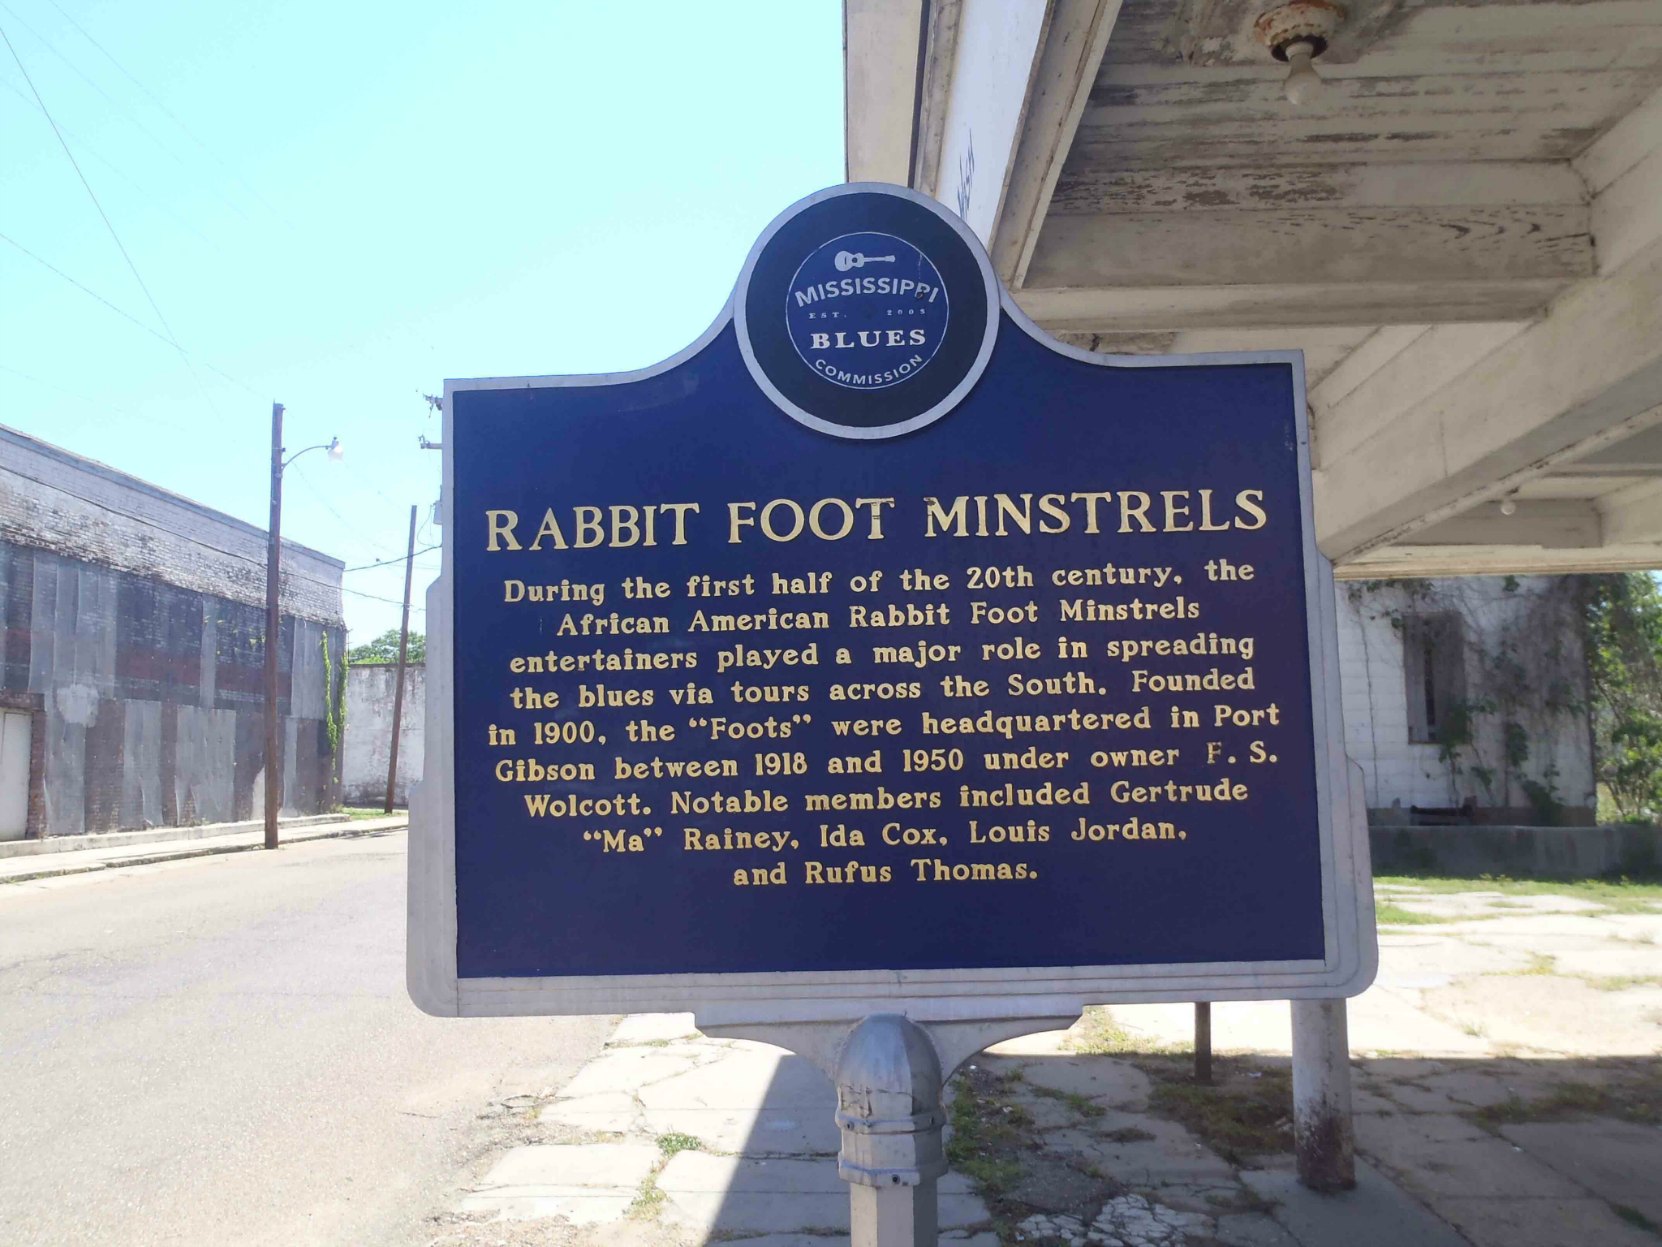 Mississippi Blues Trail marker for the Rabbit Foot Minstrels, Port Gibson, Mississippi